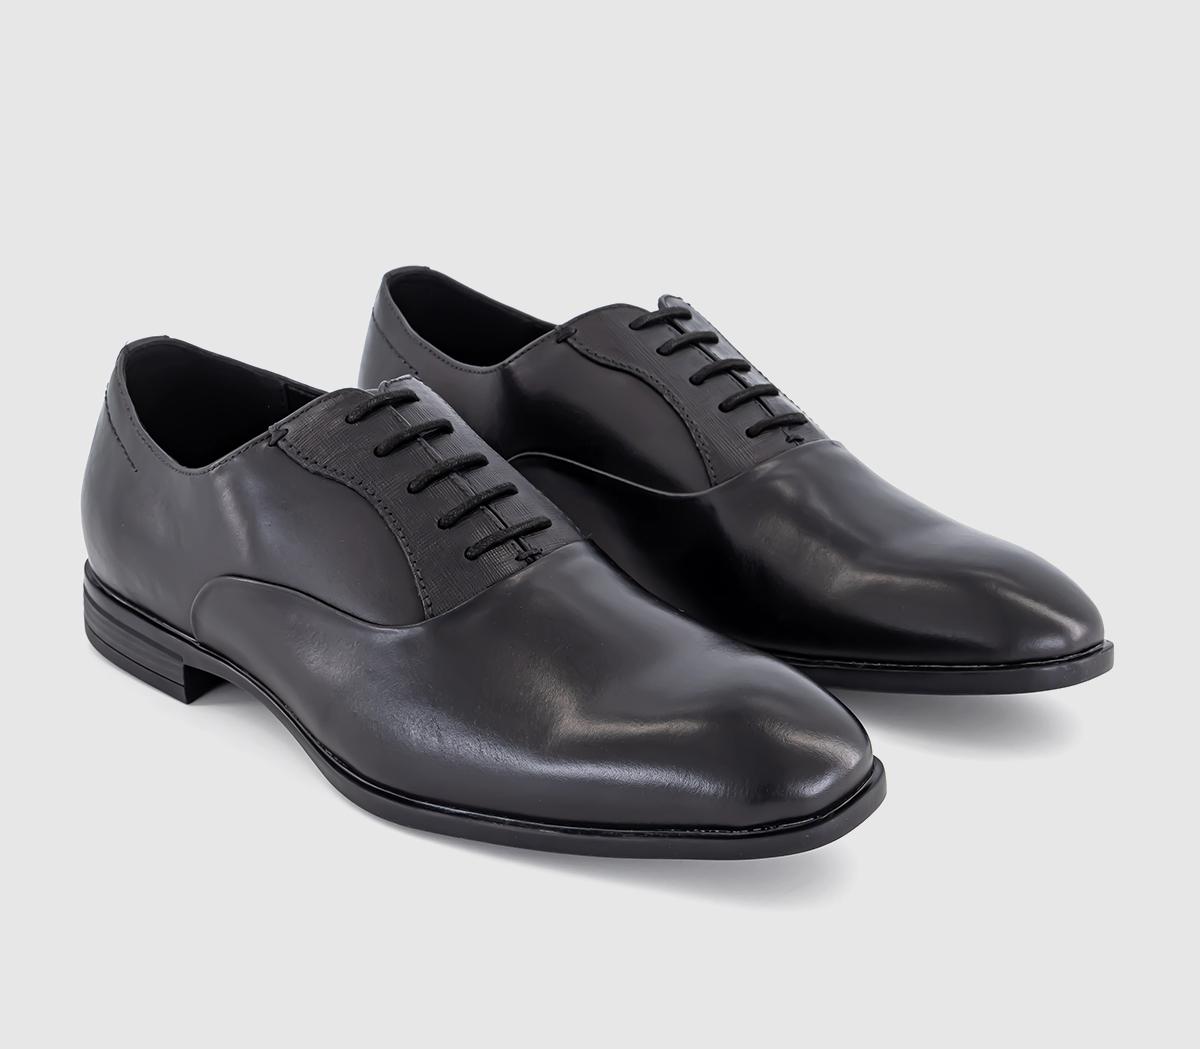 OFFICE Moreton Embossed Detail Oxford Shoes Black Leather - Men’s Smart ...